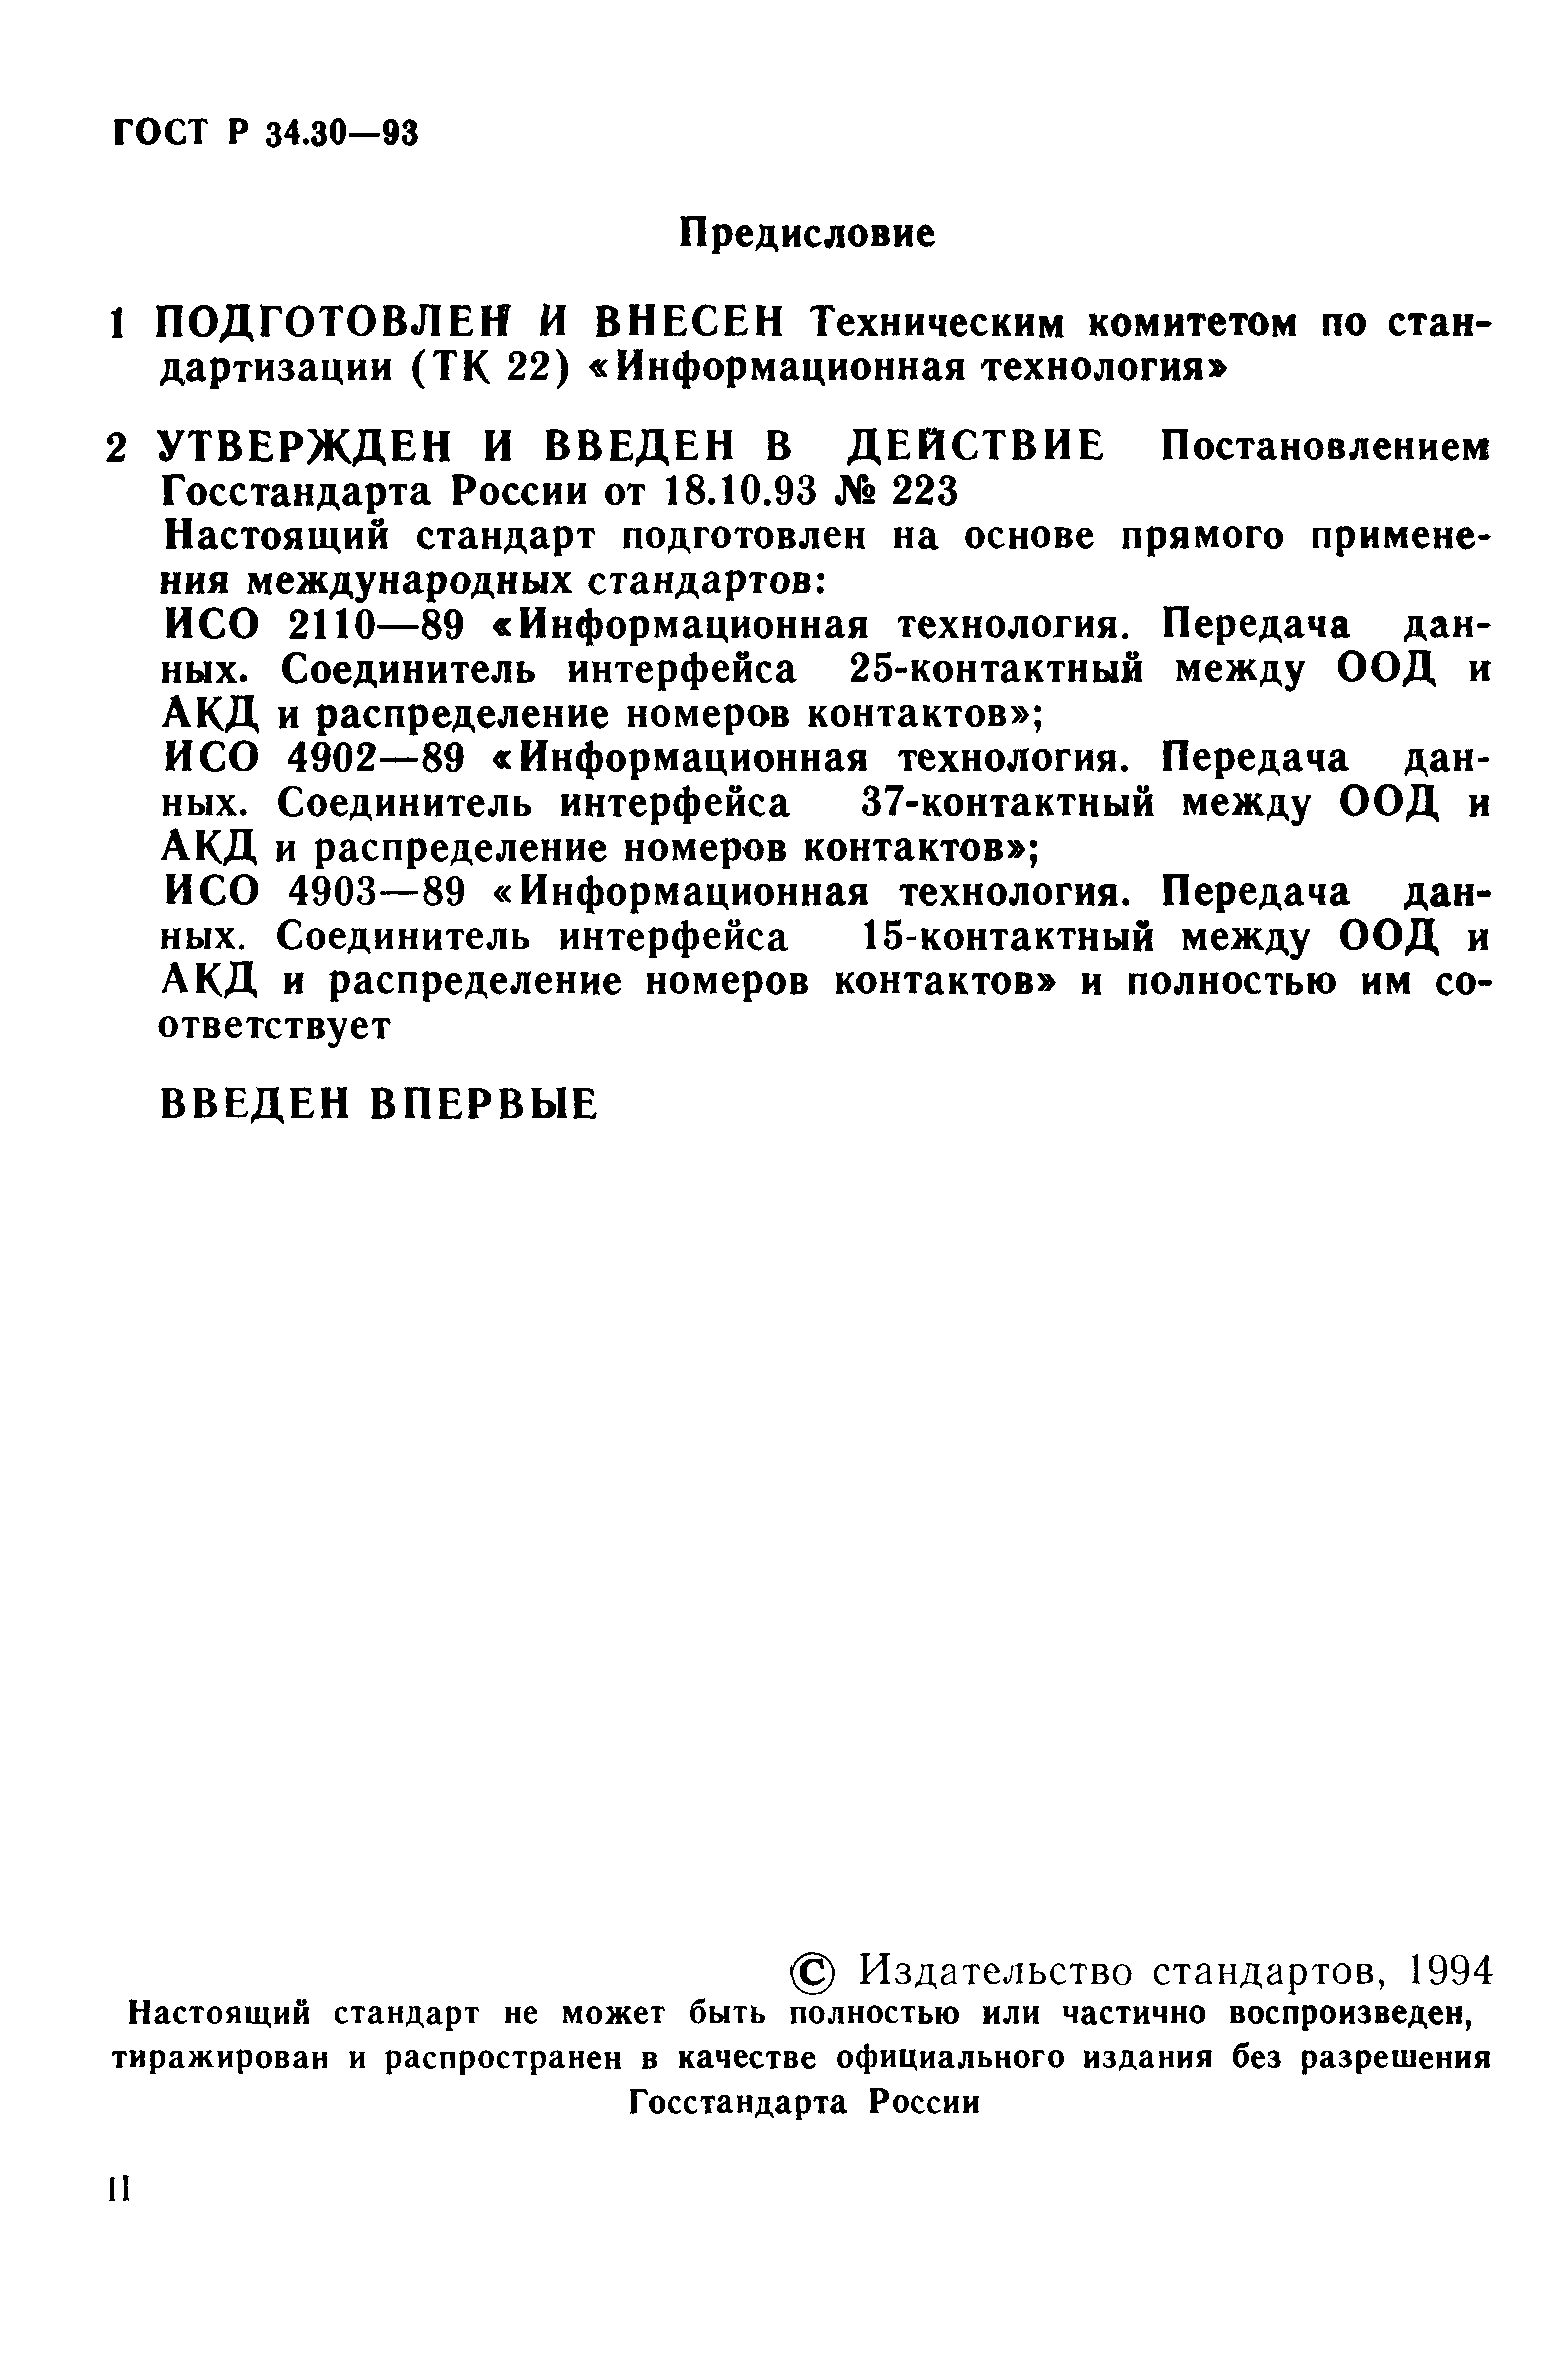 ГОСТ Р 34.30-93